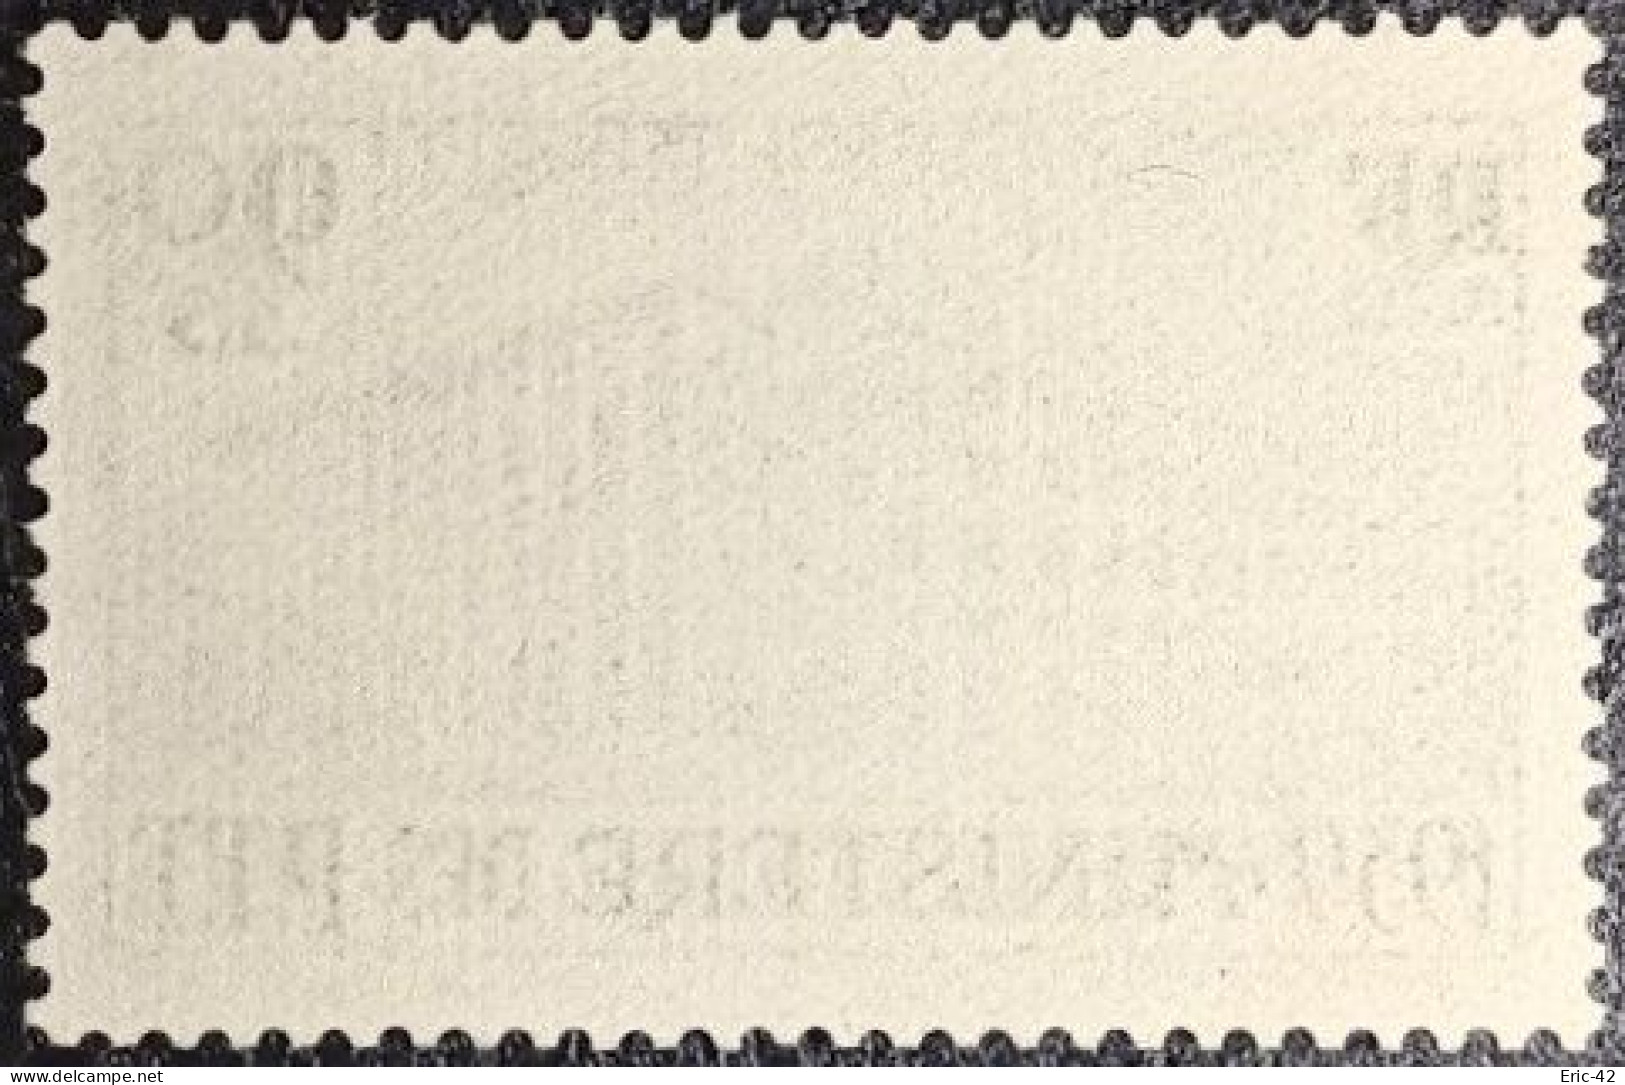 Poste France Yv N°424 P.T.T. 90c.+35c Bleu-vert. Cachet Discret. Très Bon Centrage... - Used Stamps